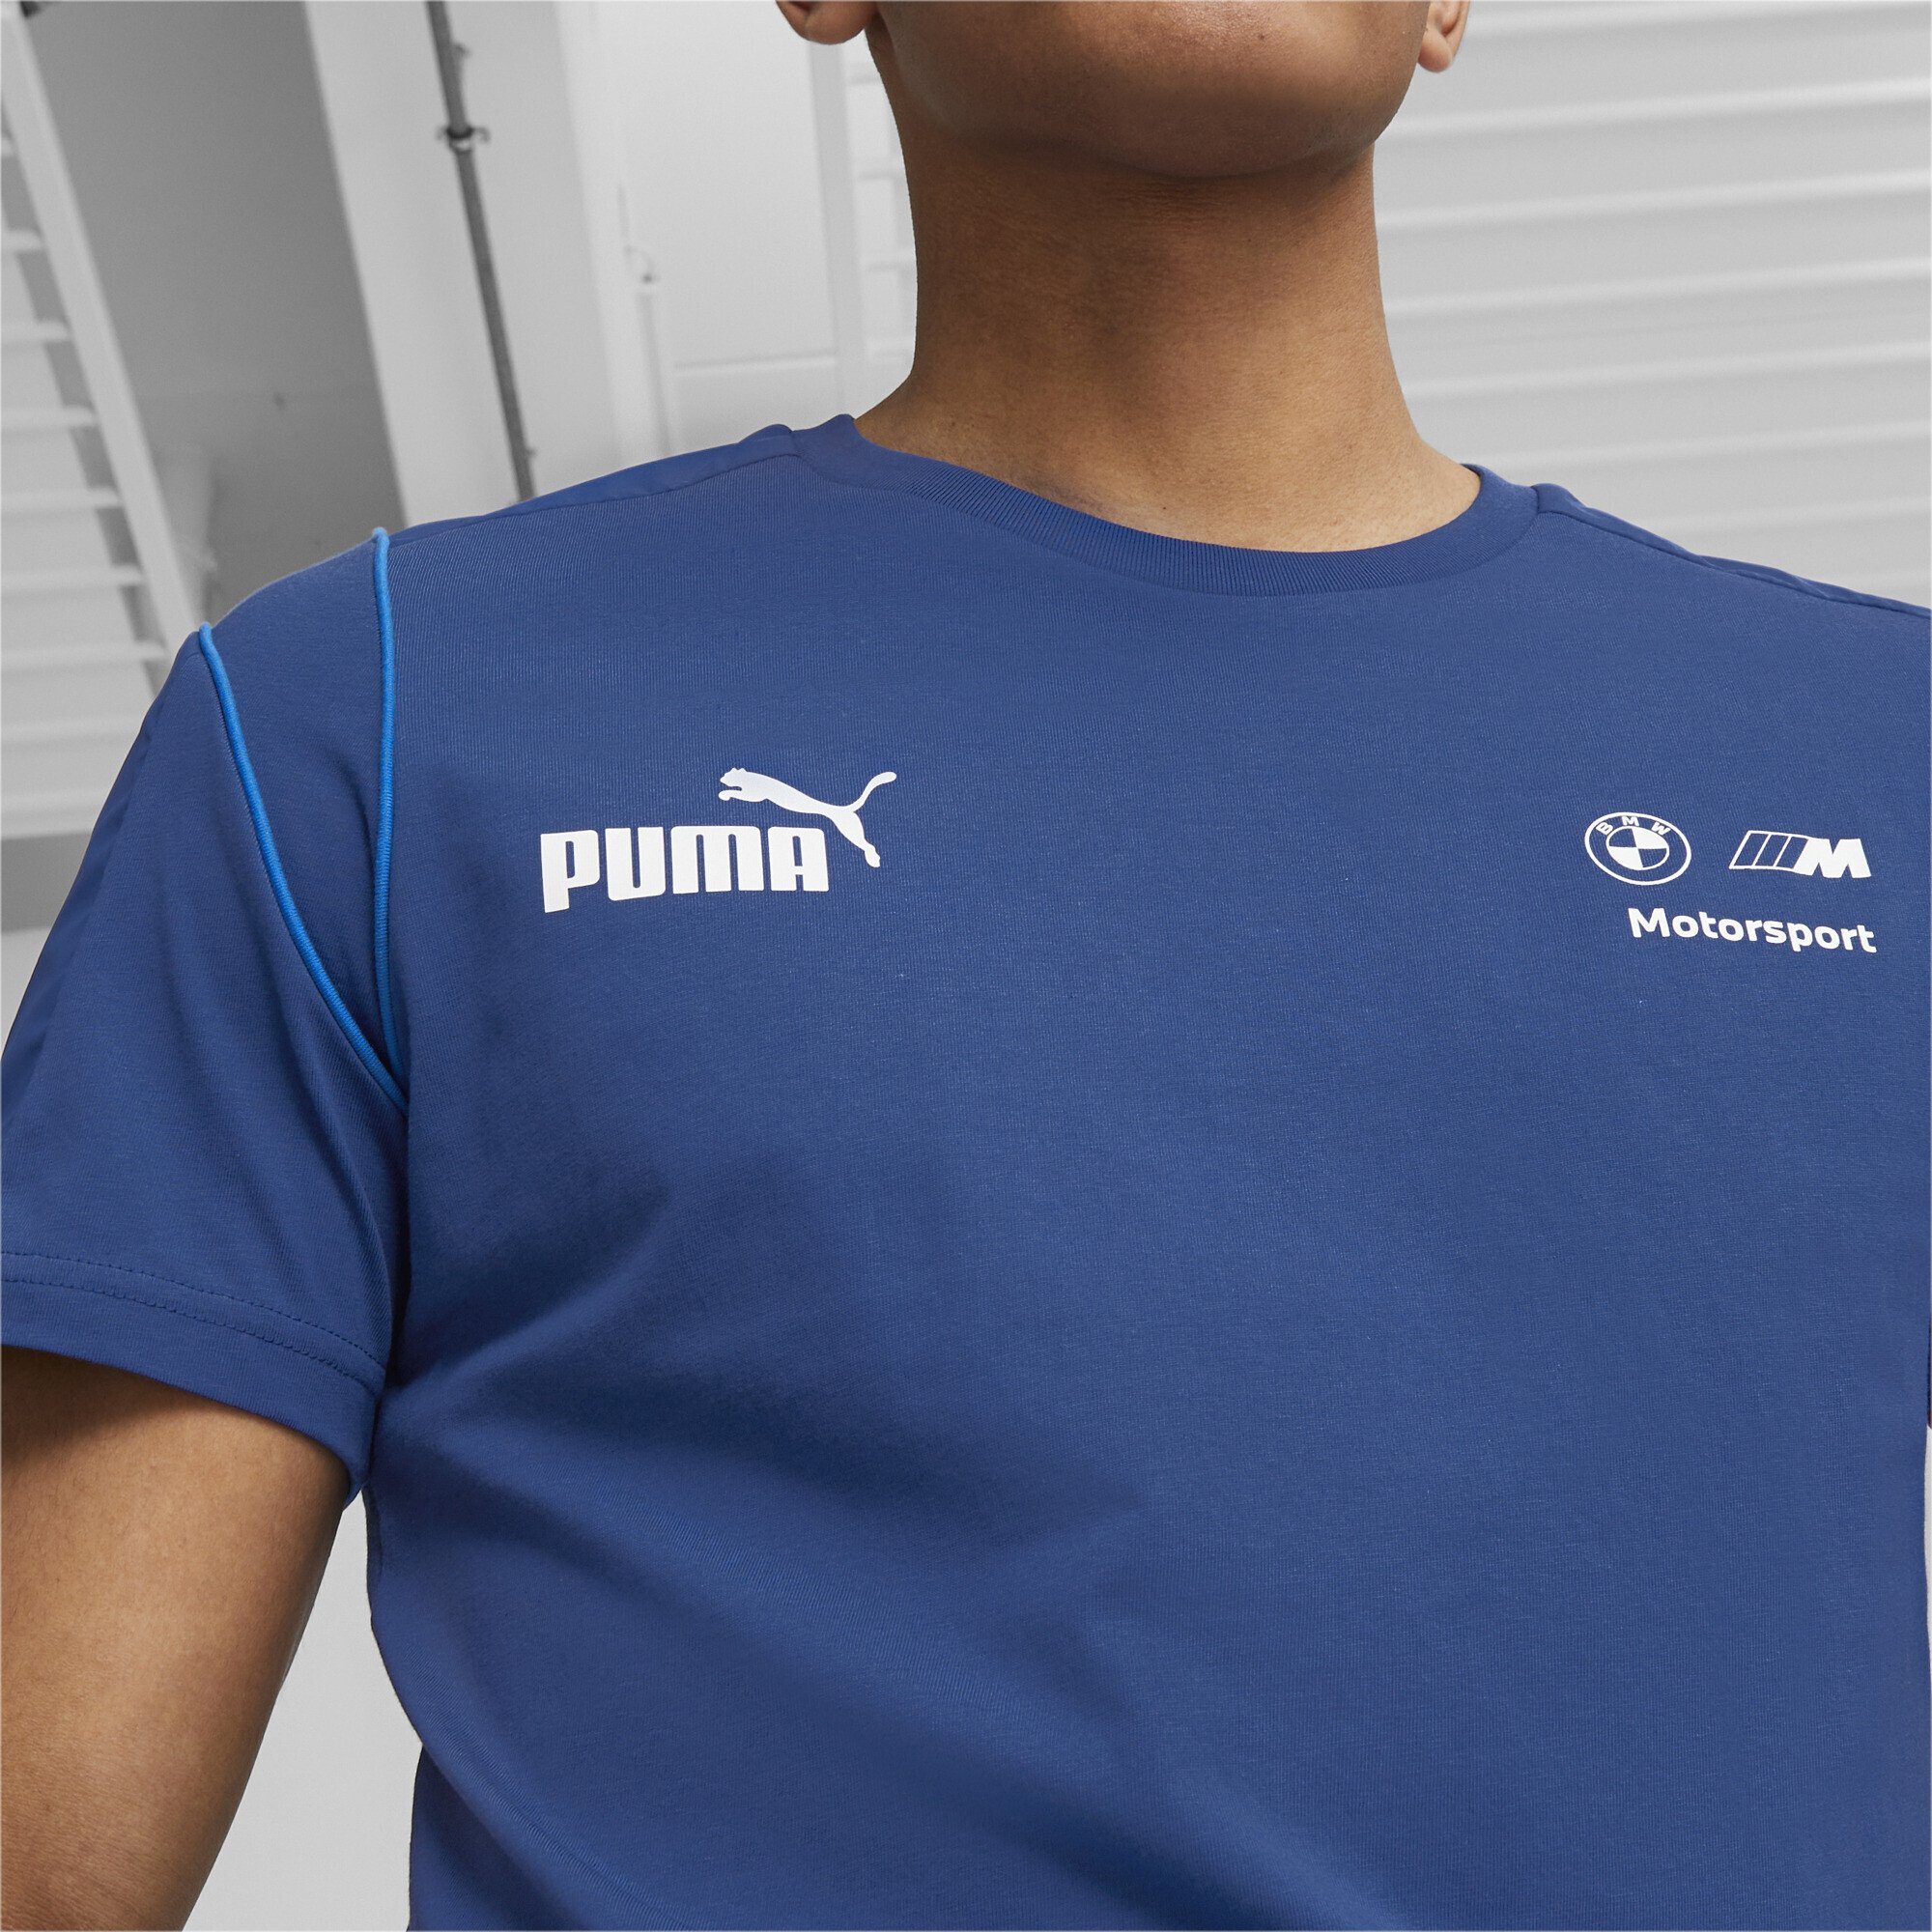 PUMA T-Shirt Blue BMW MT7 Pro Herren T-Shirt Color M M Motorsport